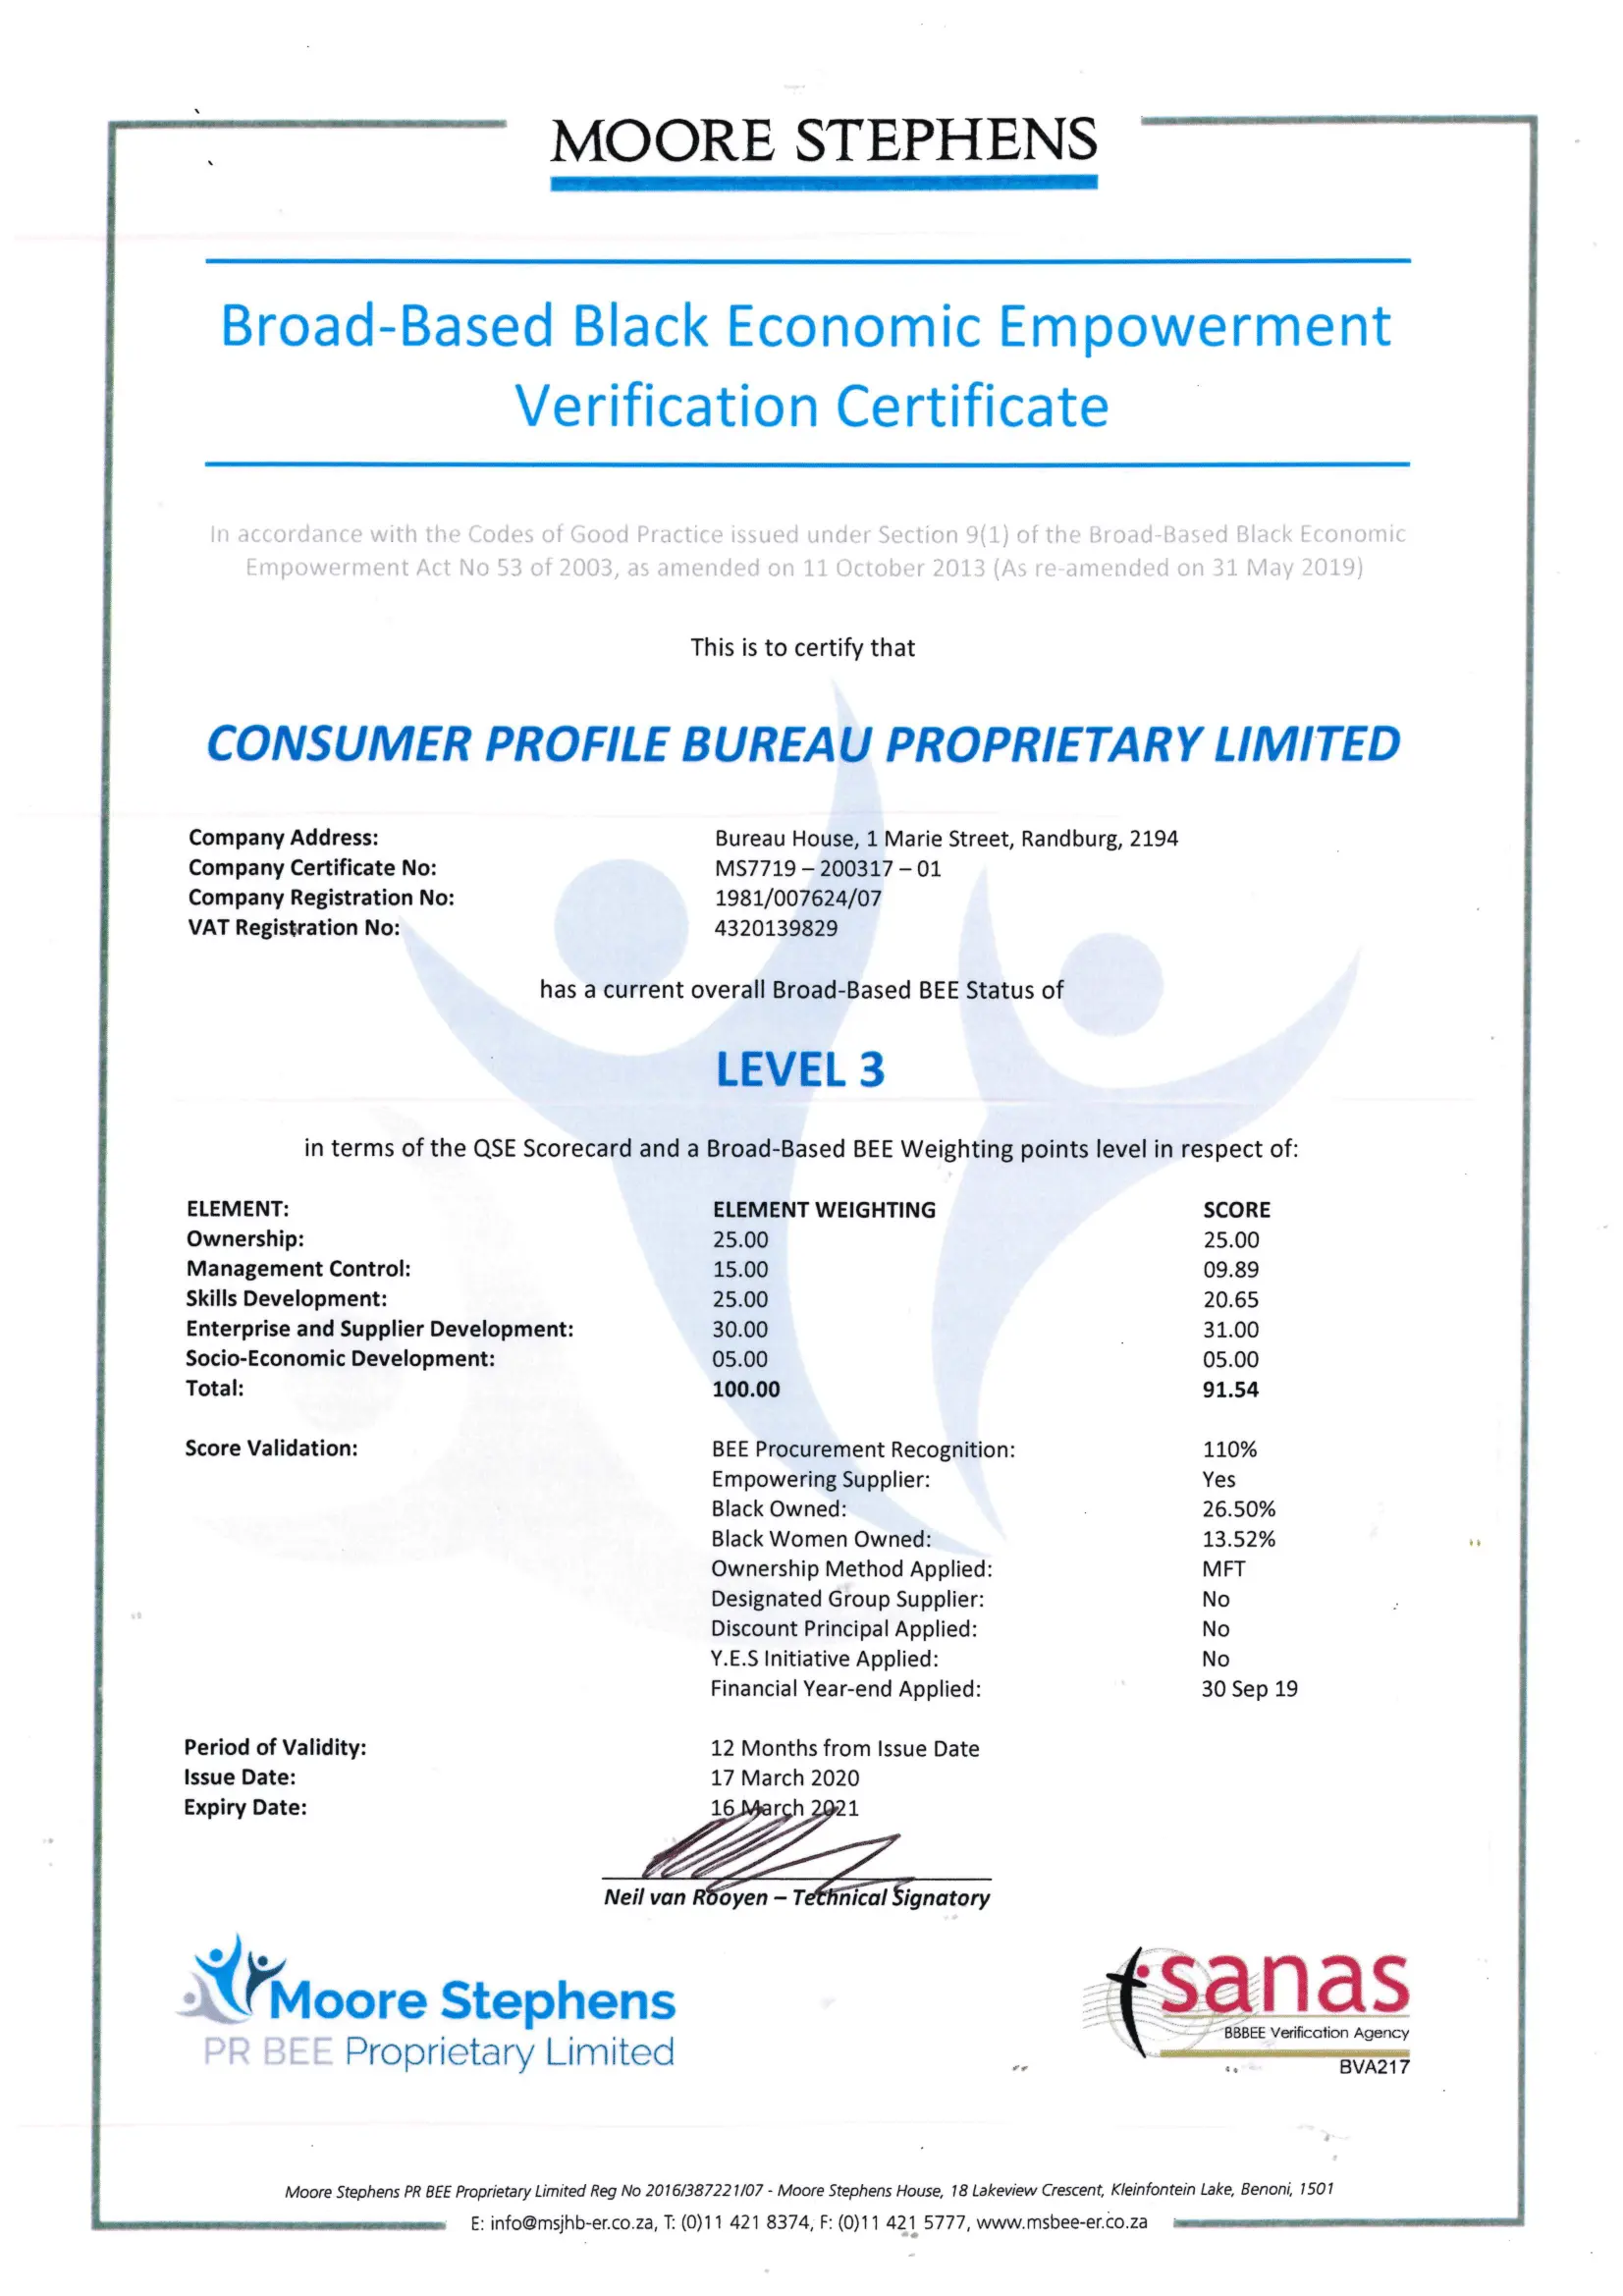 hewlett packard sandton bbbee certificate - What is the lifespan of a B-BBEE certificate